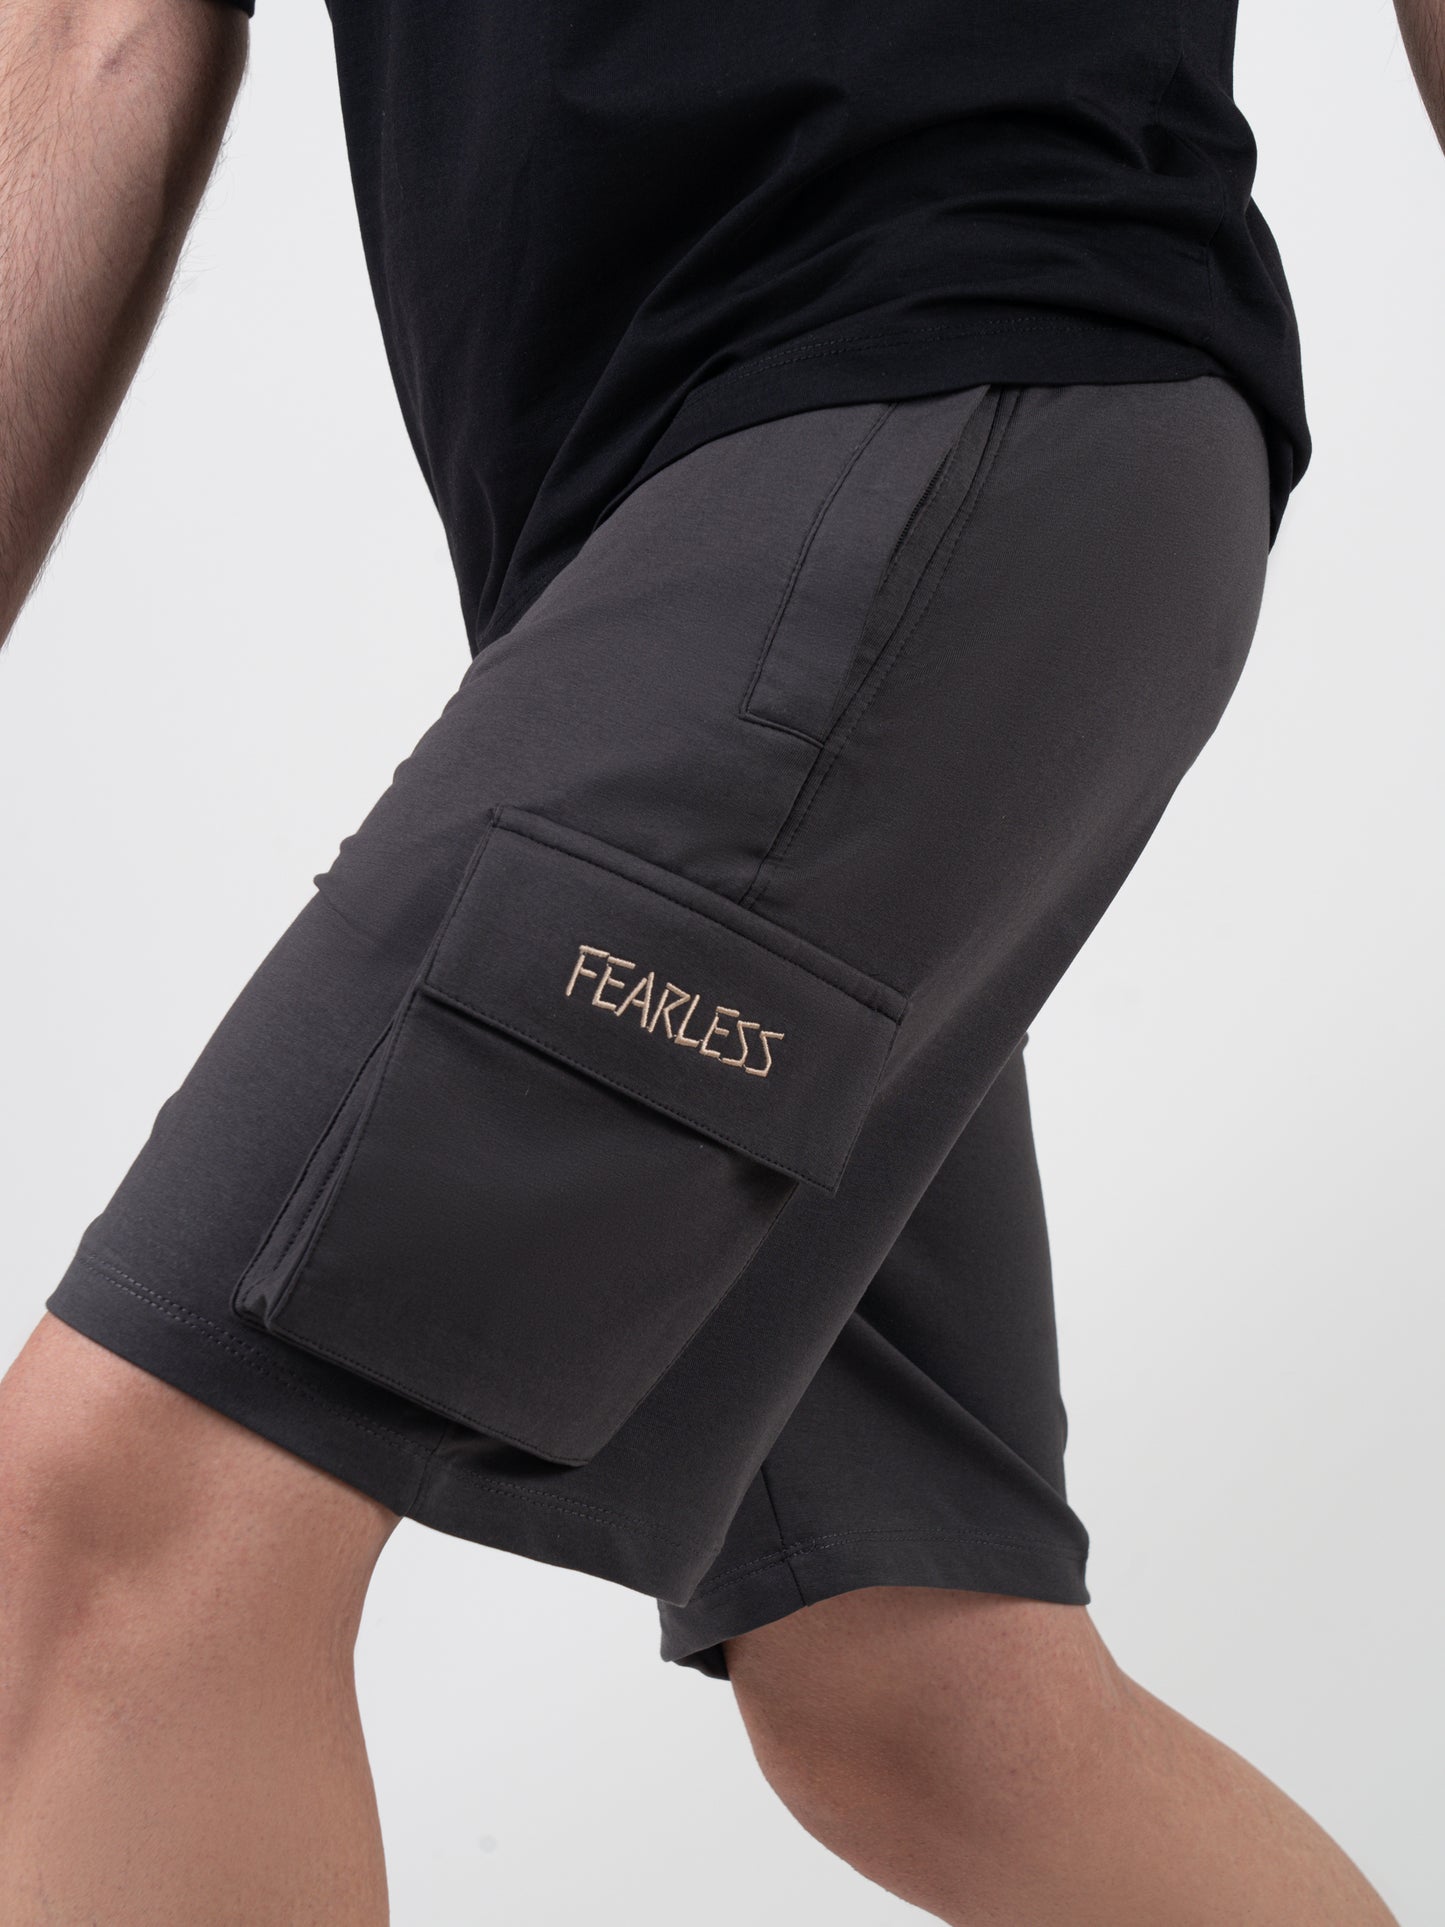 Fearless Cargo Shorts For Men - Steel Grey